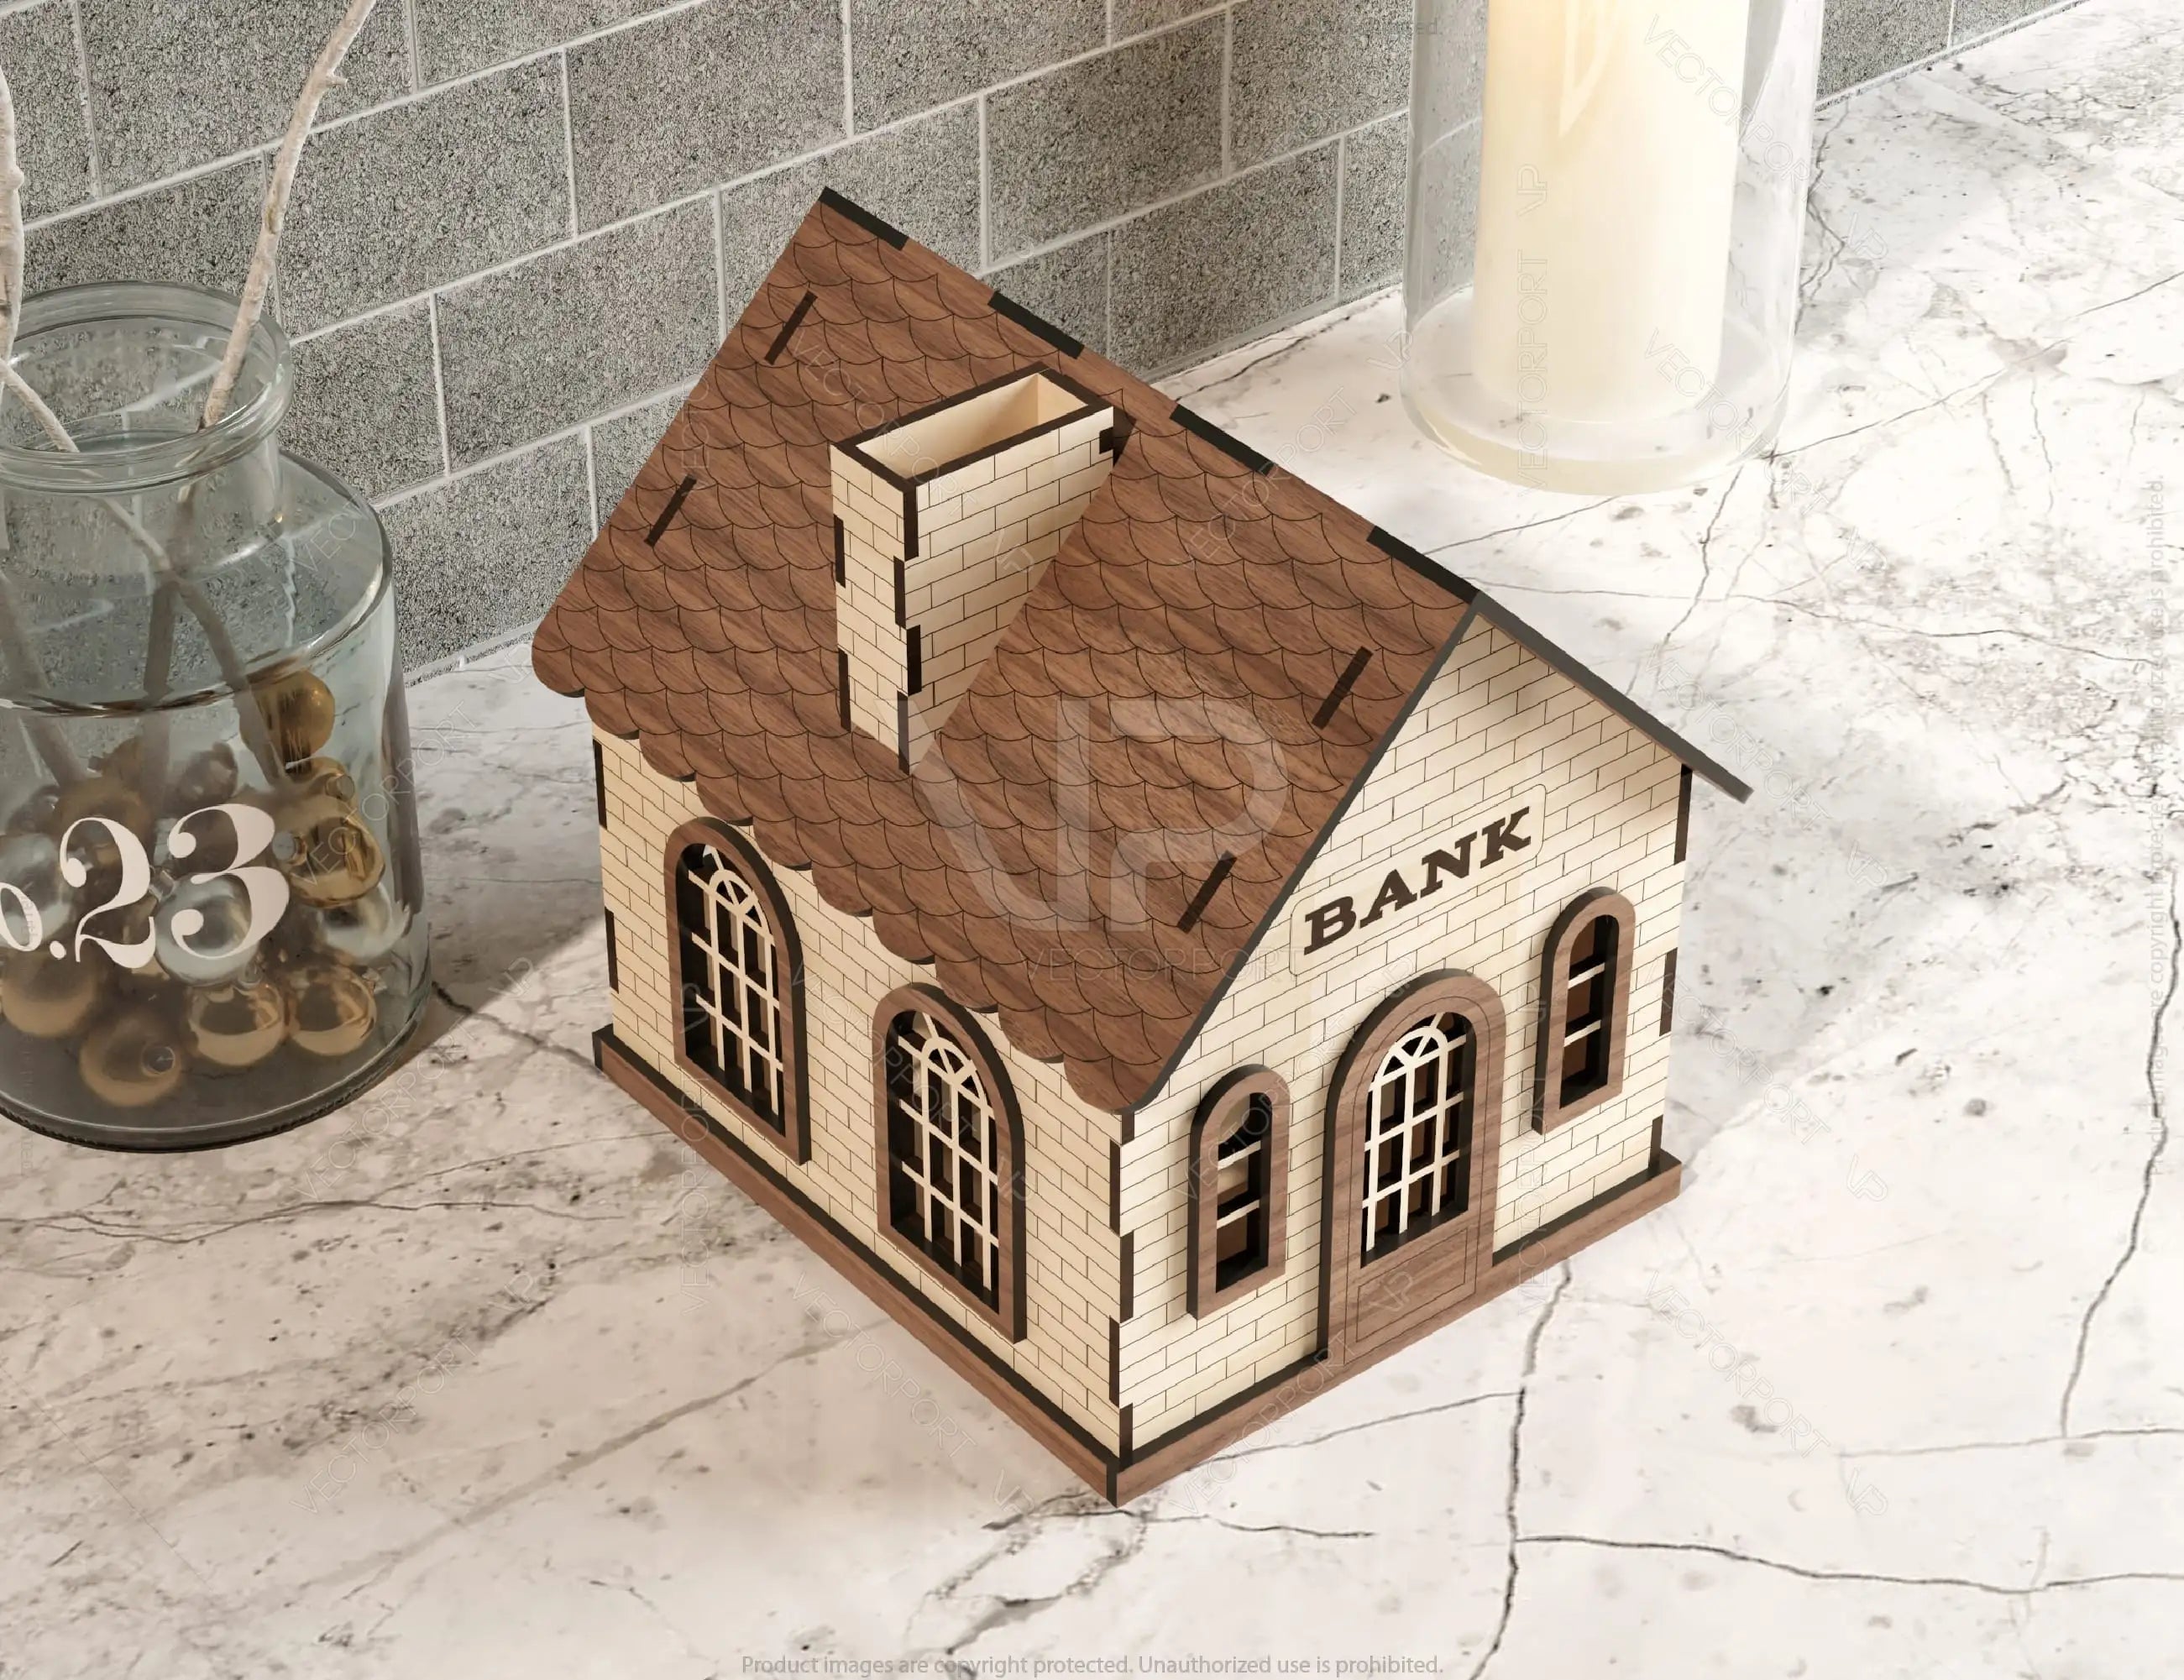 Wooden Plywood Piggy bank house money saving cash box Laser Cutting Home Digital Download |#U188|